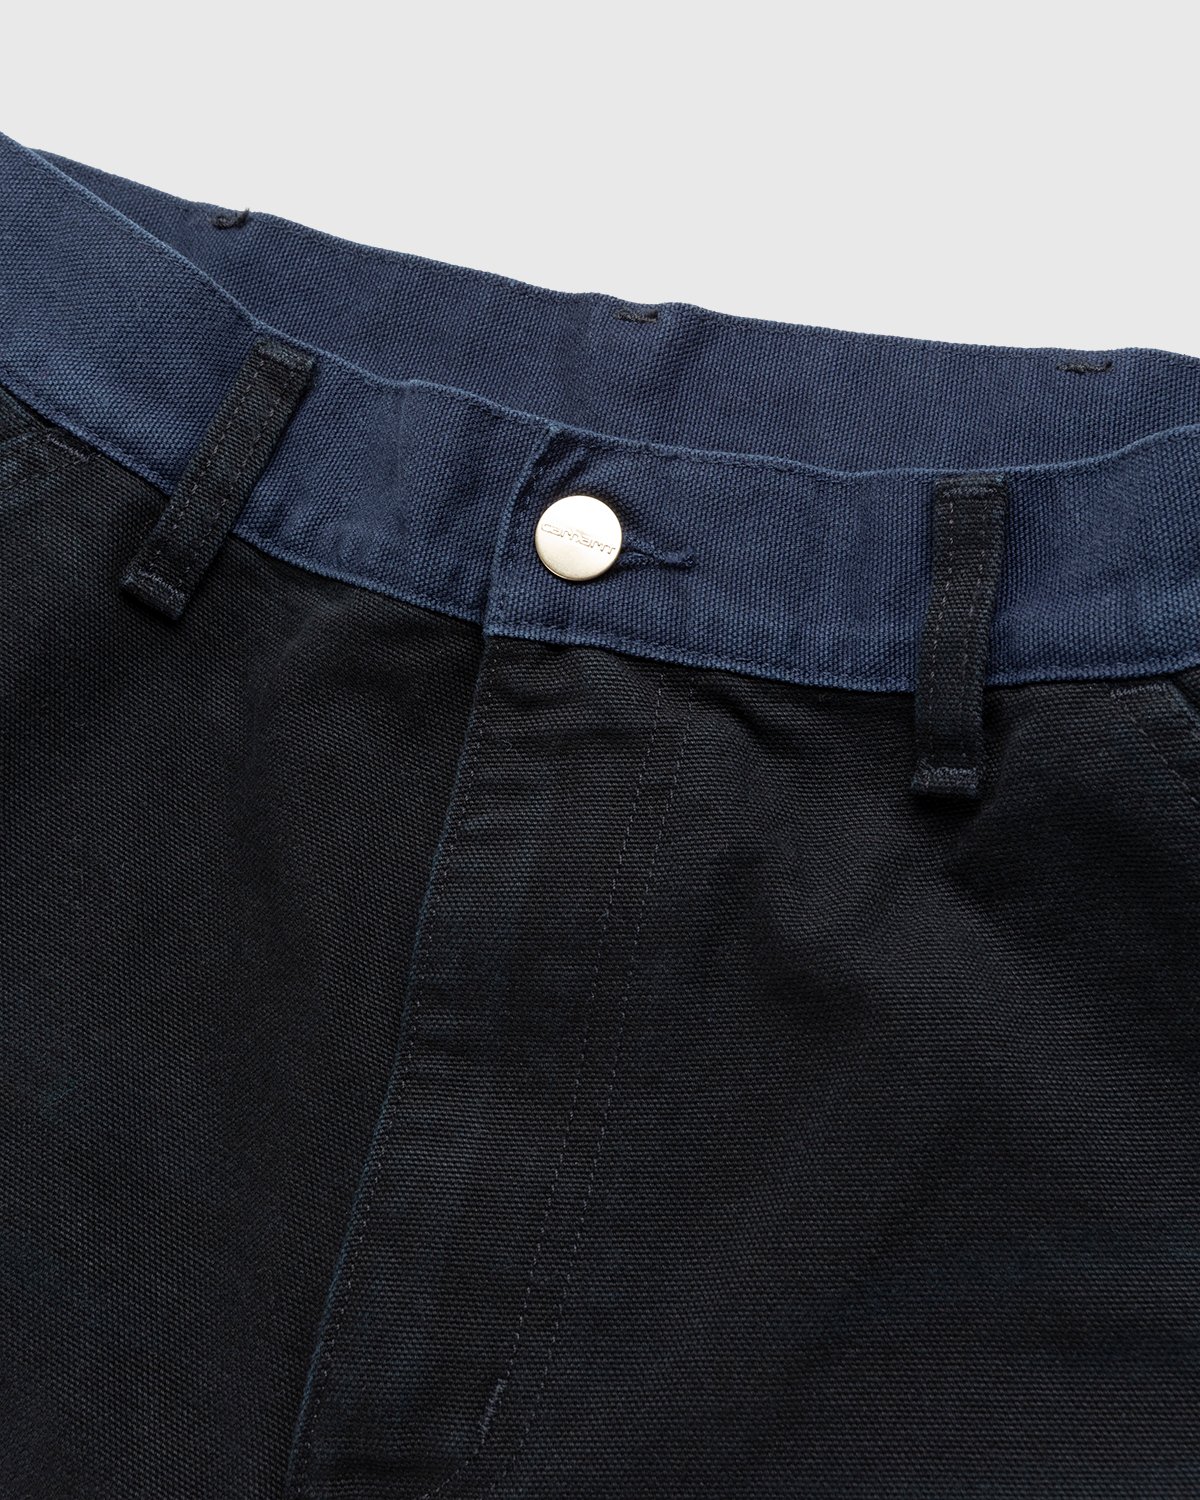 Carhartt WIP - Double Knee Pant Dark Navy - Clothing - Blue - Image 4